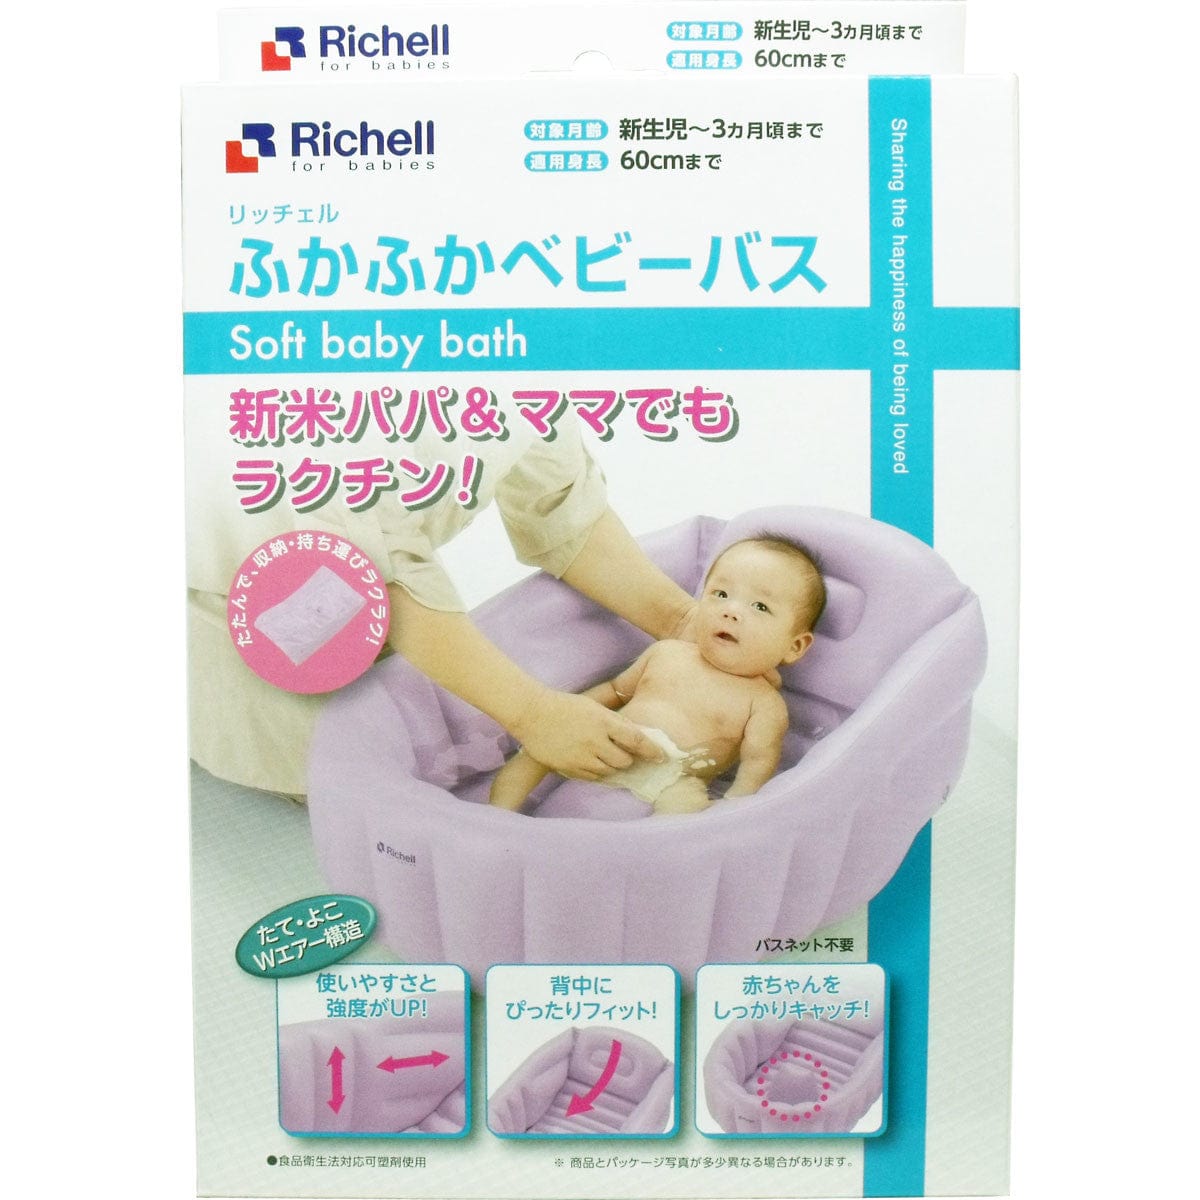 Richell - Inflatable Foldable Soft Baby Bath Tub Step Up - Purple Baby Bath Tub 4945680205047 Durio.sg